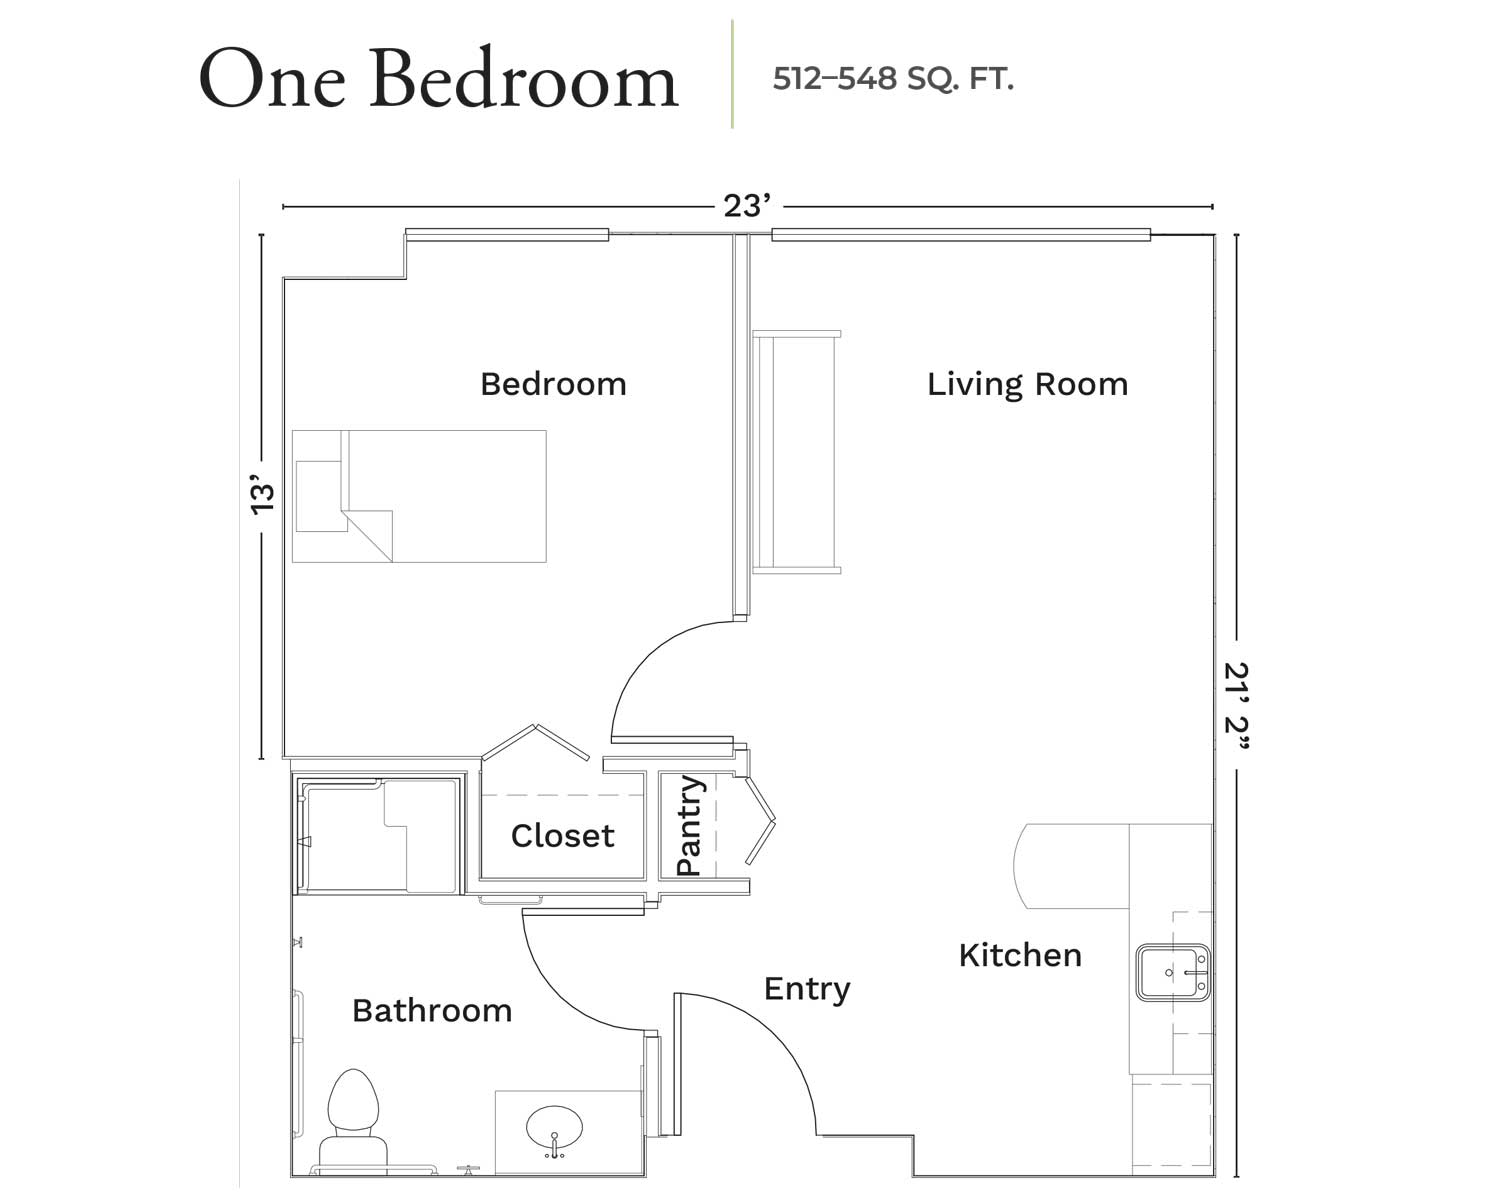 One-bedroom unit floor plan with measurements, living room, kitchen, bathroom, and closet.